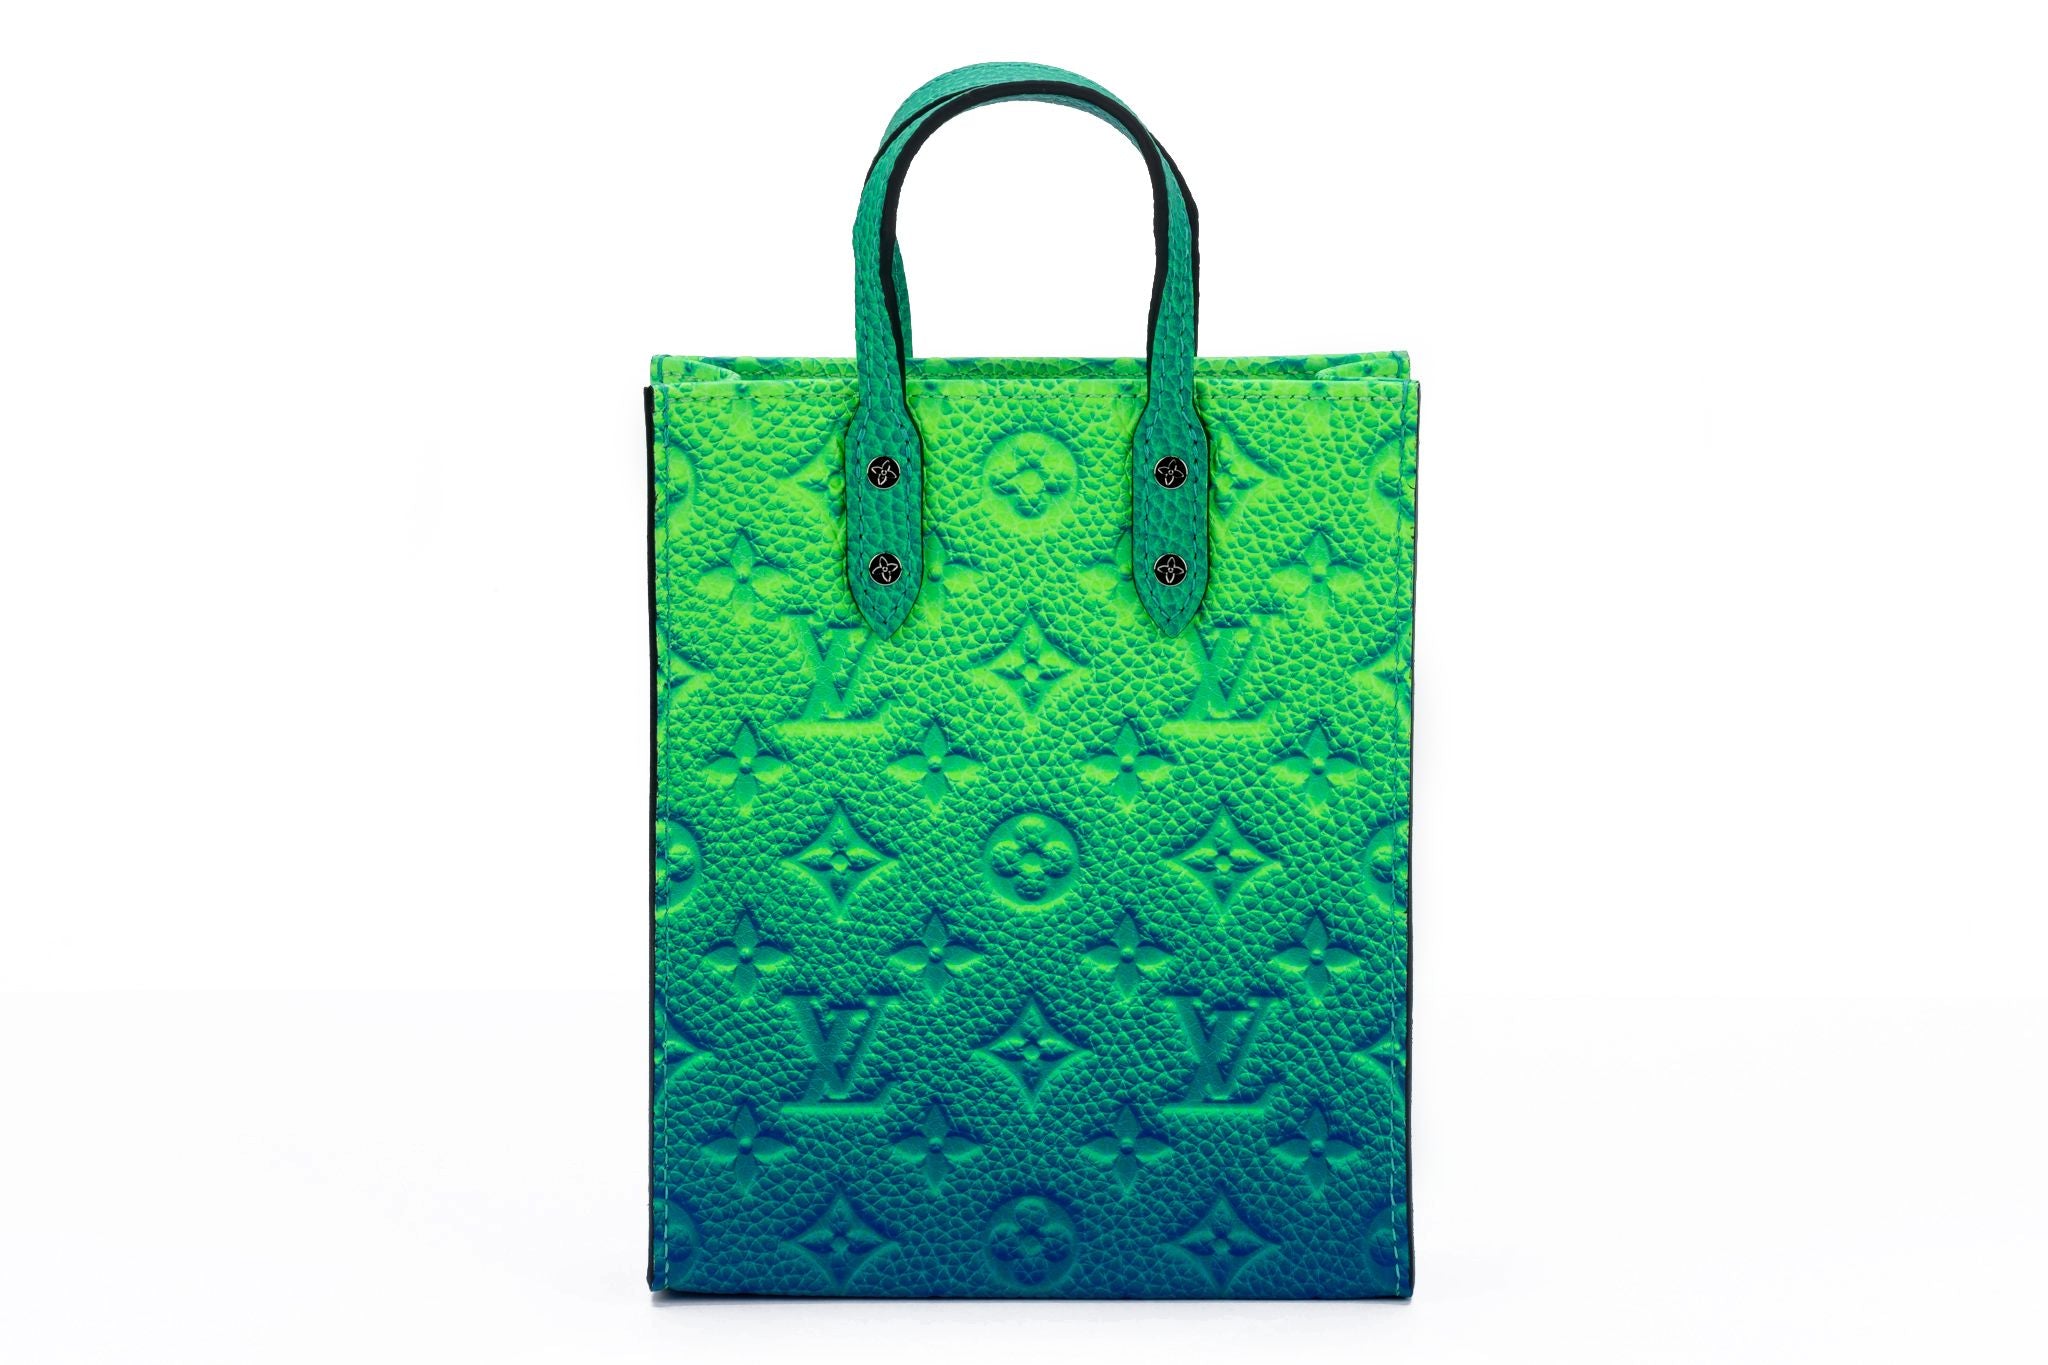 Louis Vuitton goes green